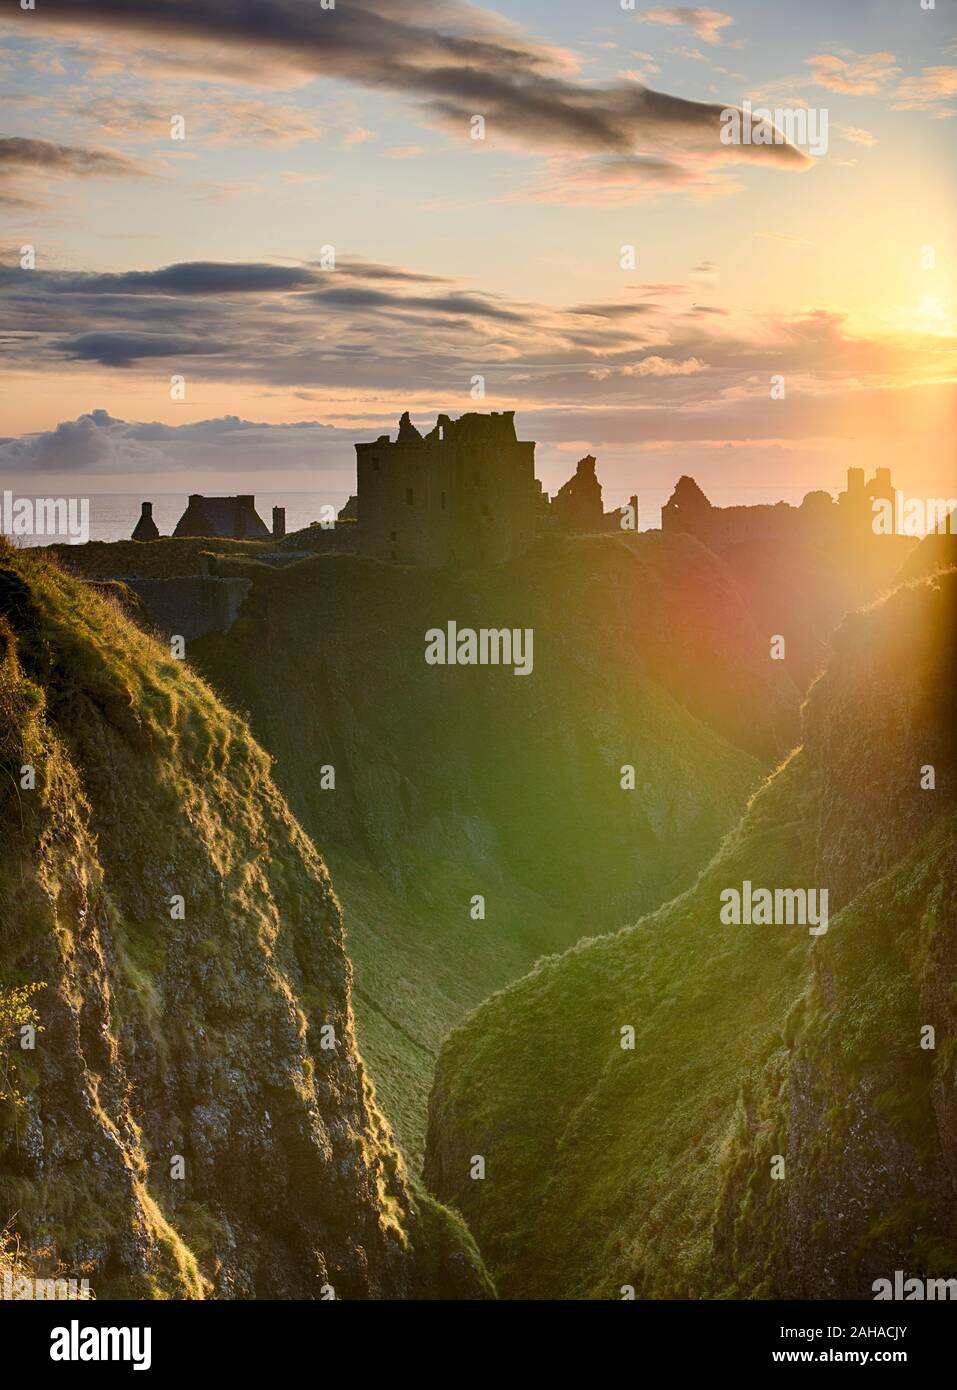 Sunrise over the North Sea on Dunnottar castle, Scotland Stock Photo